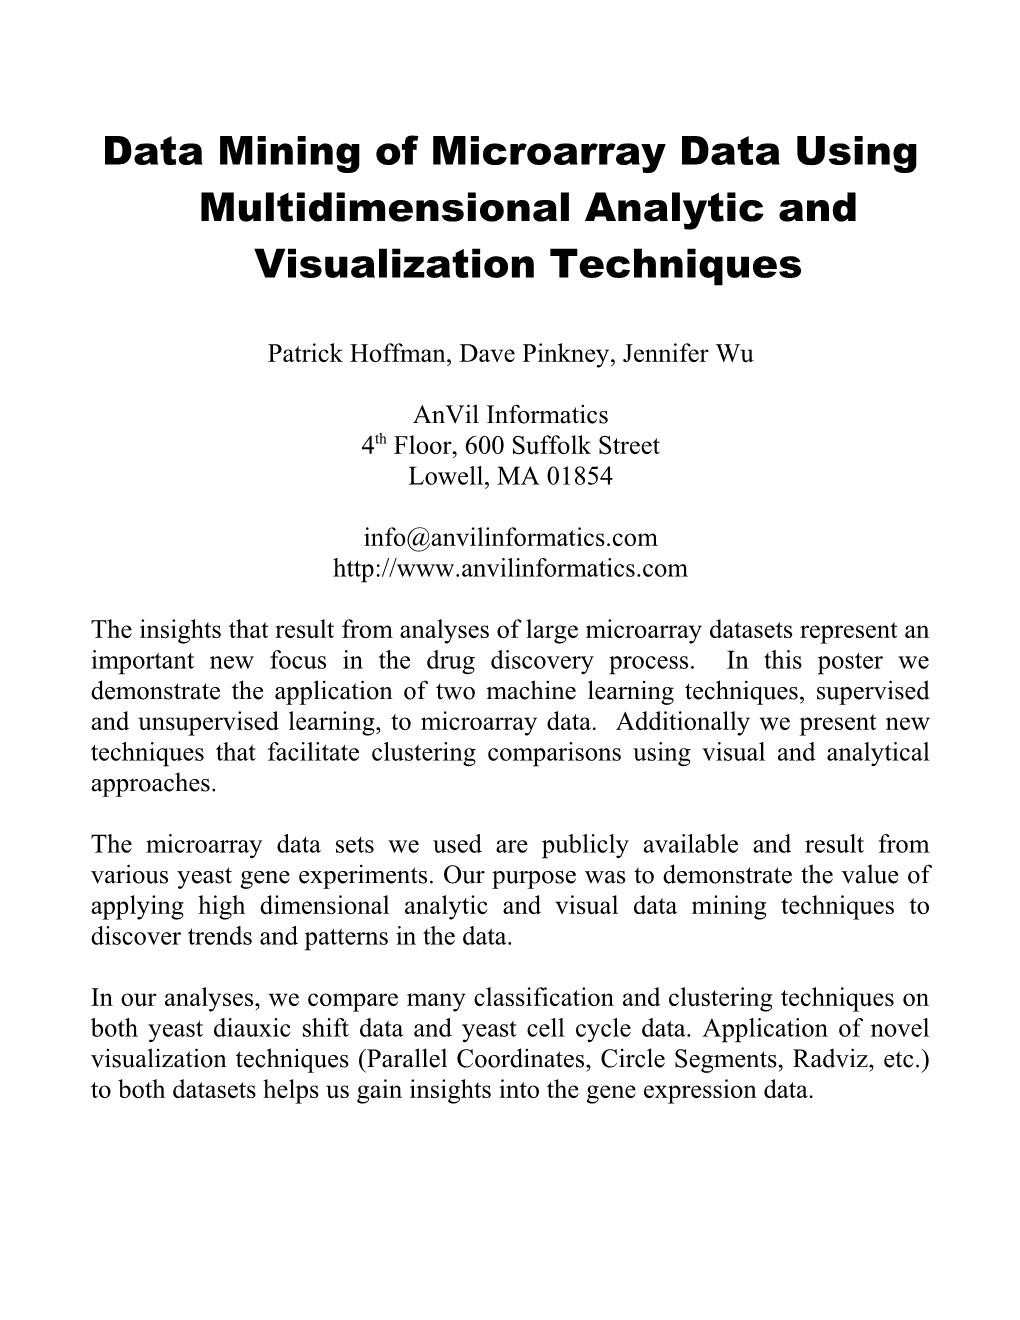 Datamining of Yeast Functional Genomics Data Using Multidimensional Analytic and Visualization